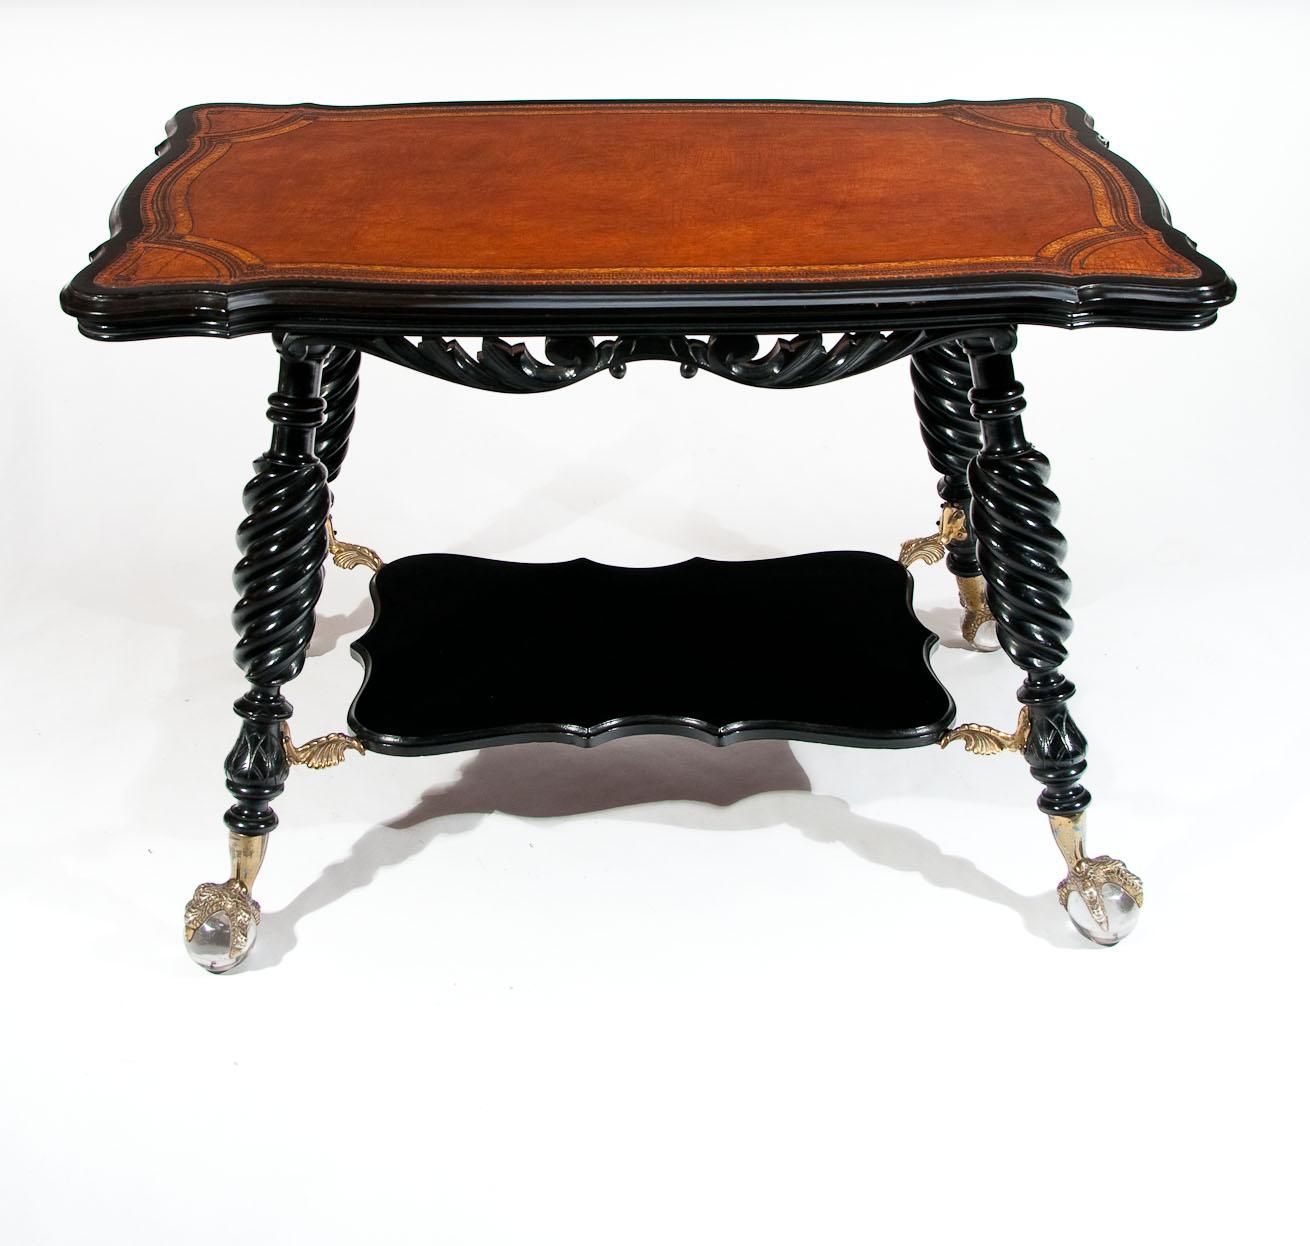 Unusual Antique Ebonized and Leathered Table 1